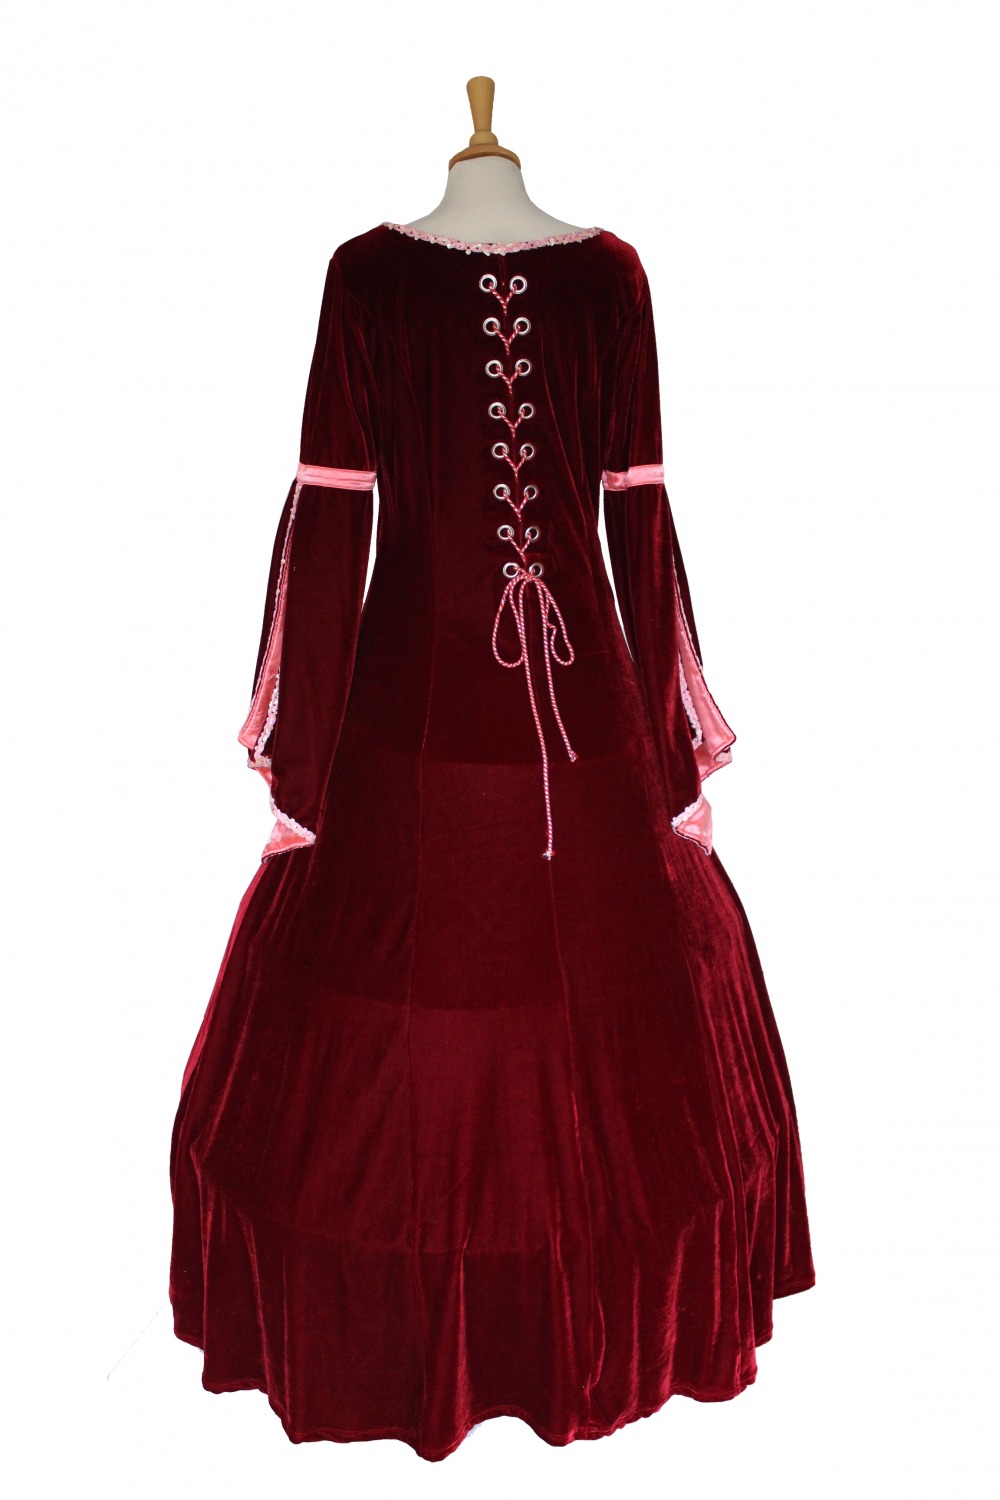 Ladies Medieval Renaissance Petite Shorter Length Costume And Headdress (Size 14 - 16) Image